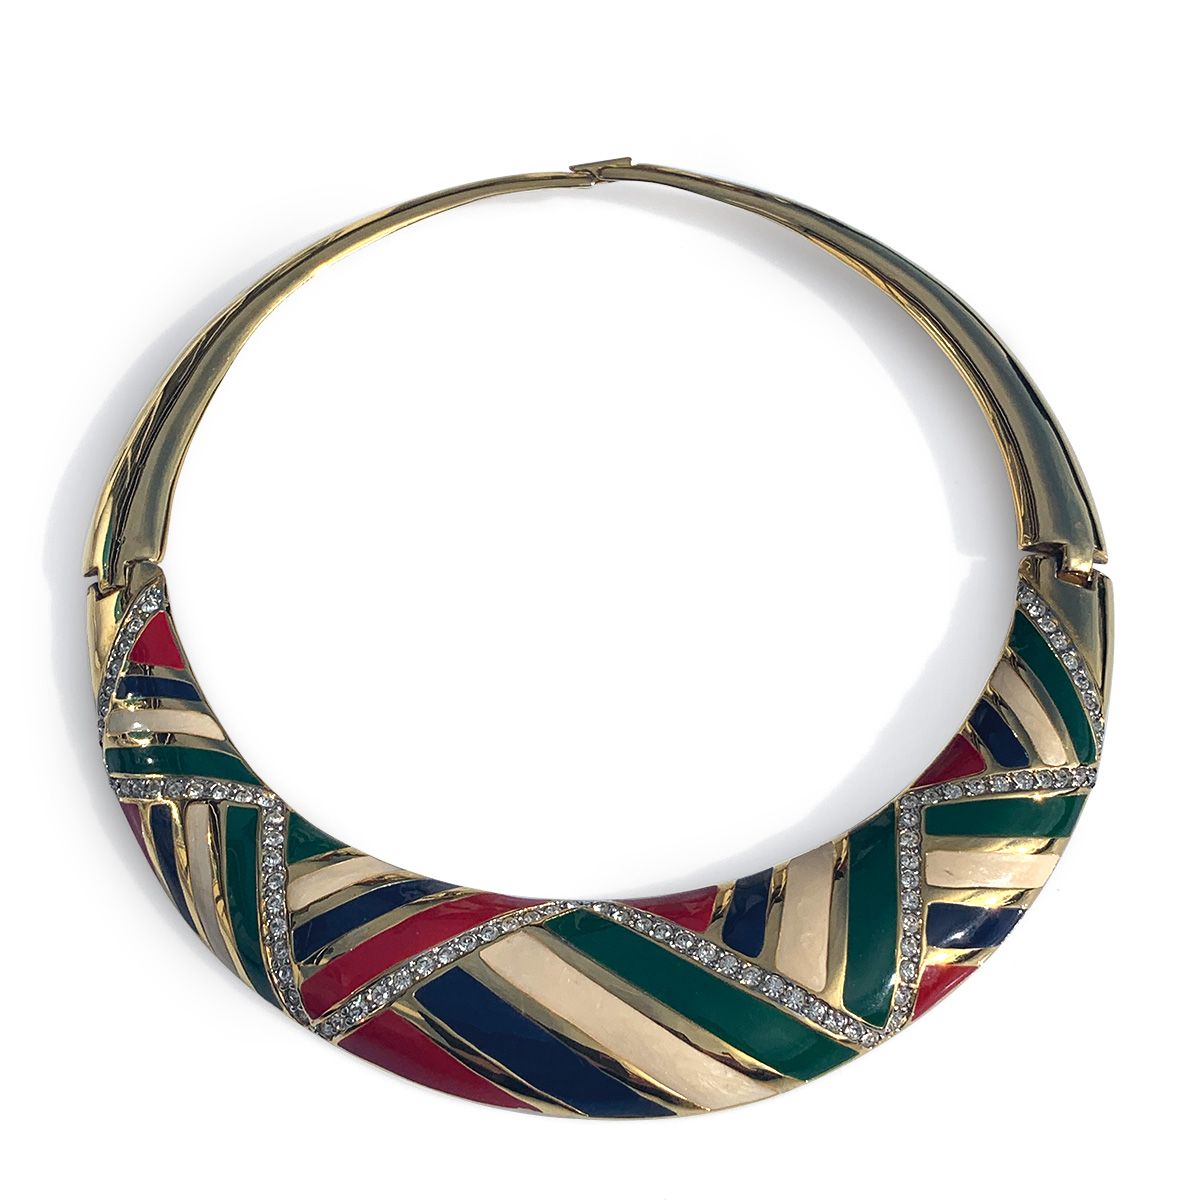 Art Deco inspired Collar geometric cream, green, red